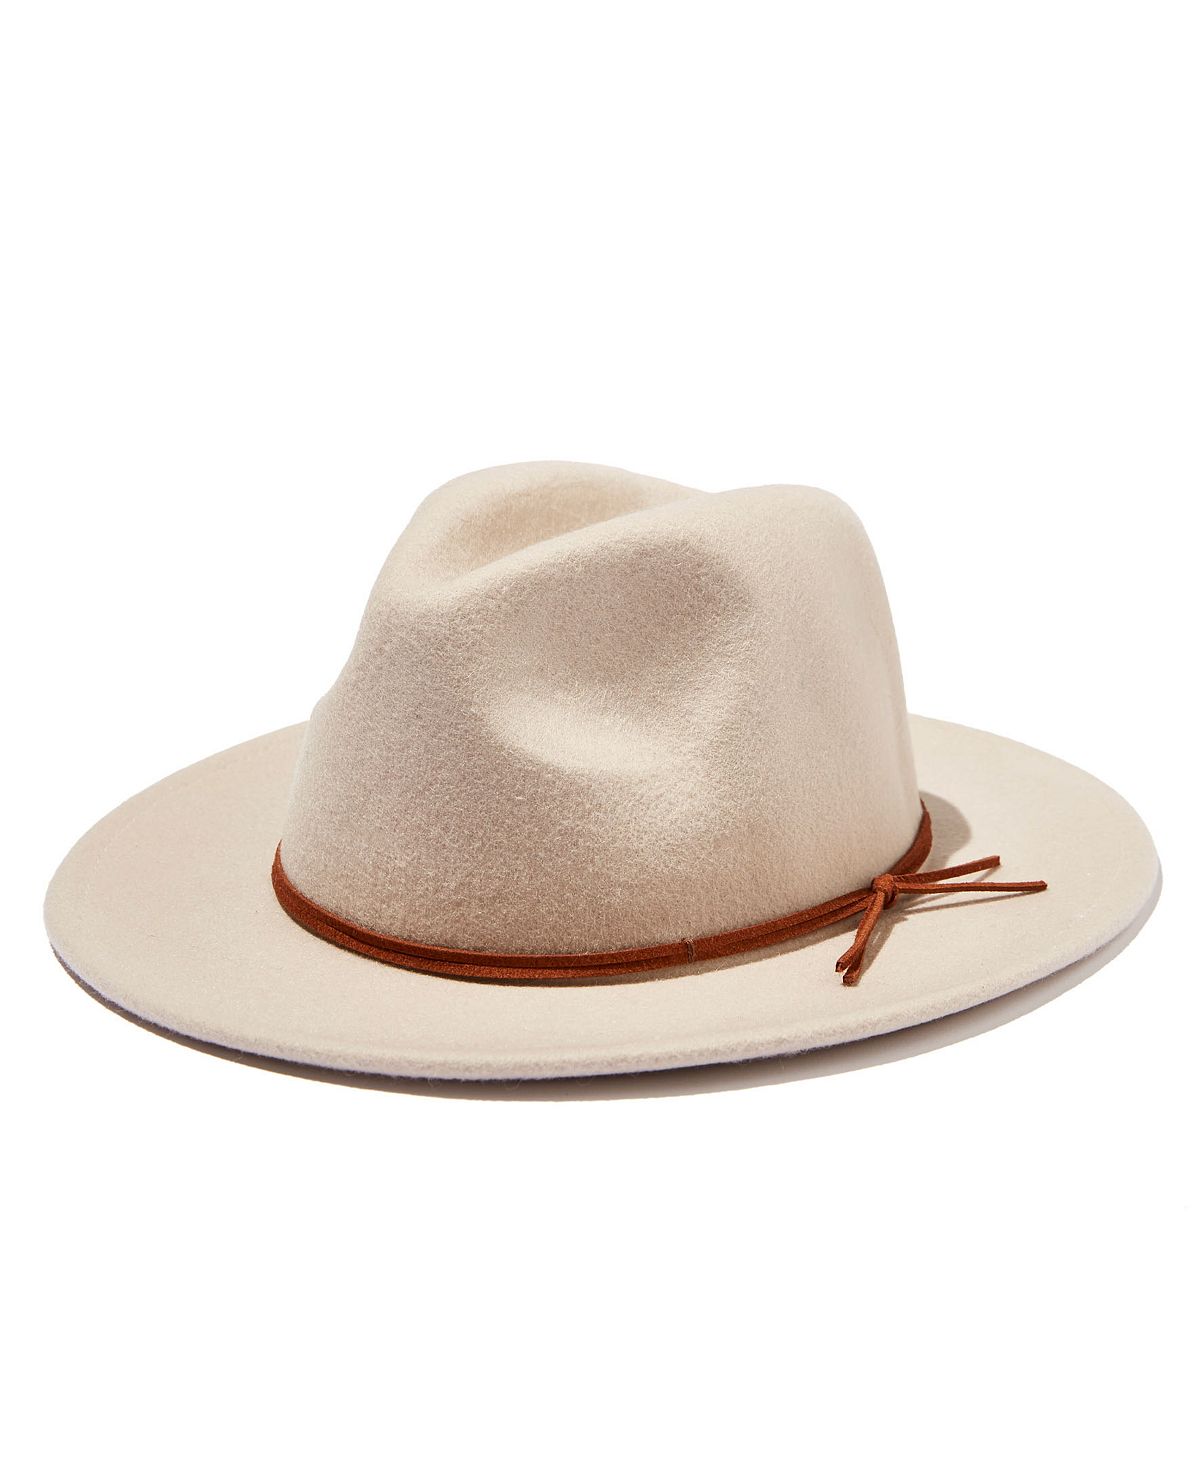 Шляпа с широкими полями для больших девочек COTTON ON starnone domenico ties